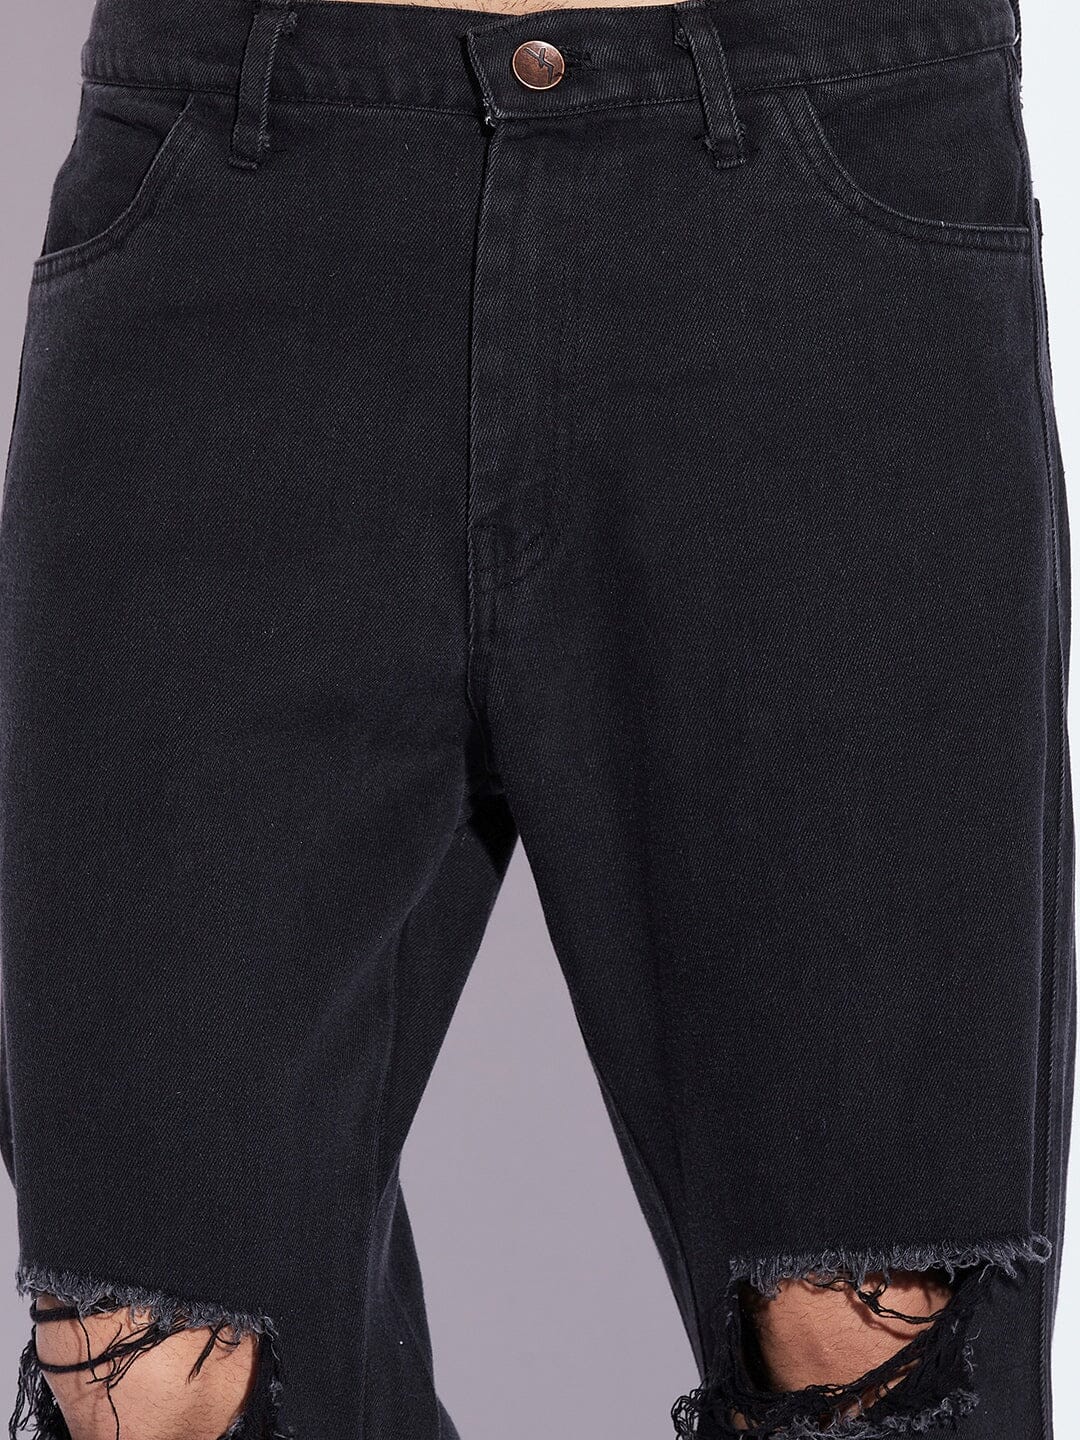 Buy SweatyRocks Women's Hight Waisted Stretch Ripped Skinny Jeans  Distressed Denim Pants, Dark Black, X-Small at Amazon.in